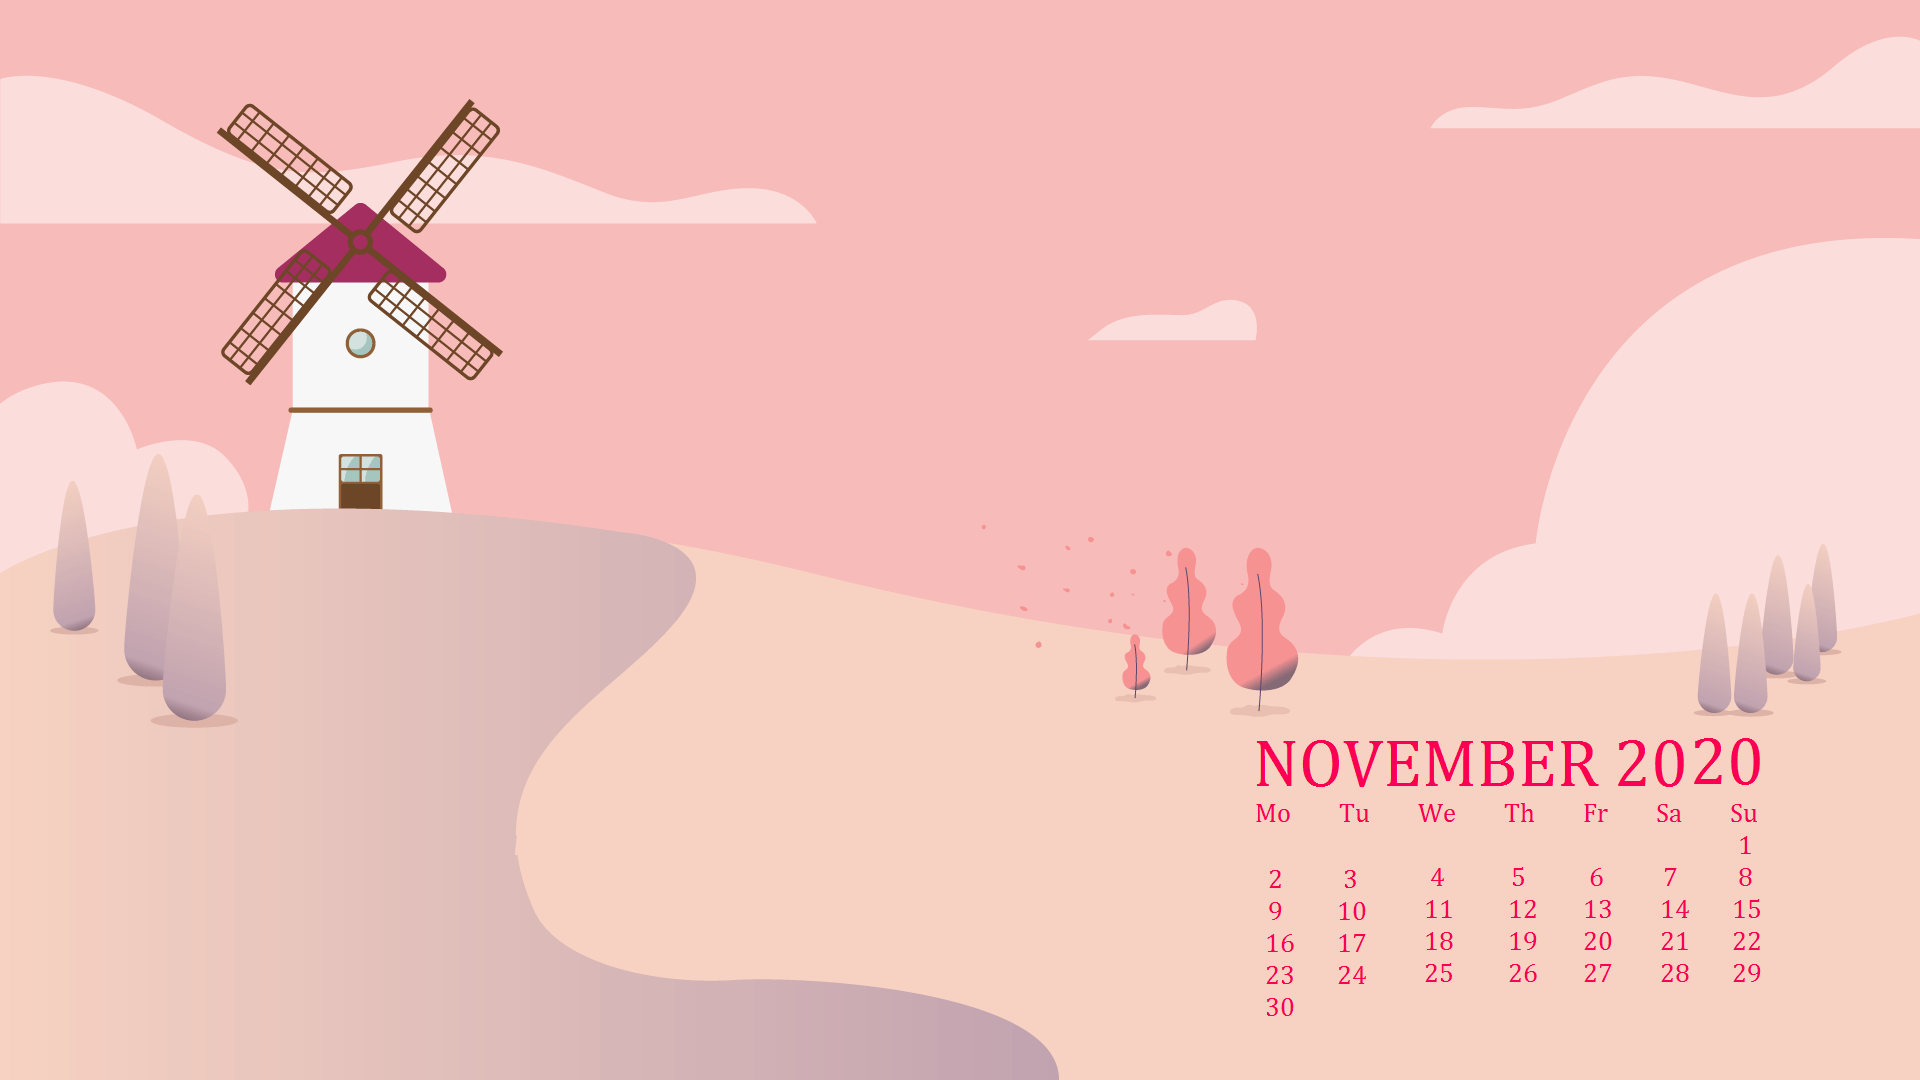 November 2020 Desktop Calendar Wallpaper. Calendar wallpaper, Desktop calendar, Calendar